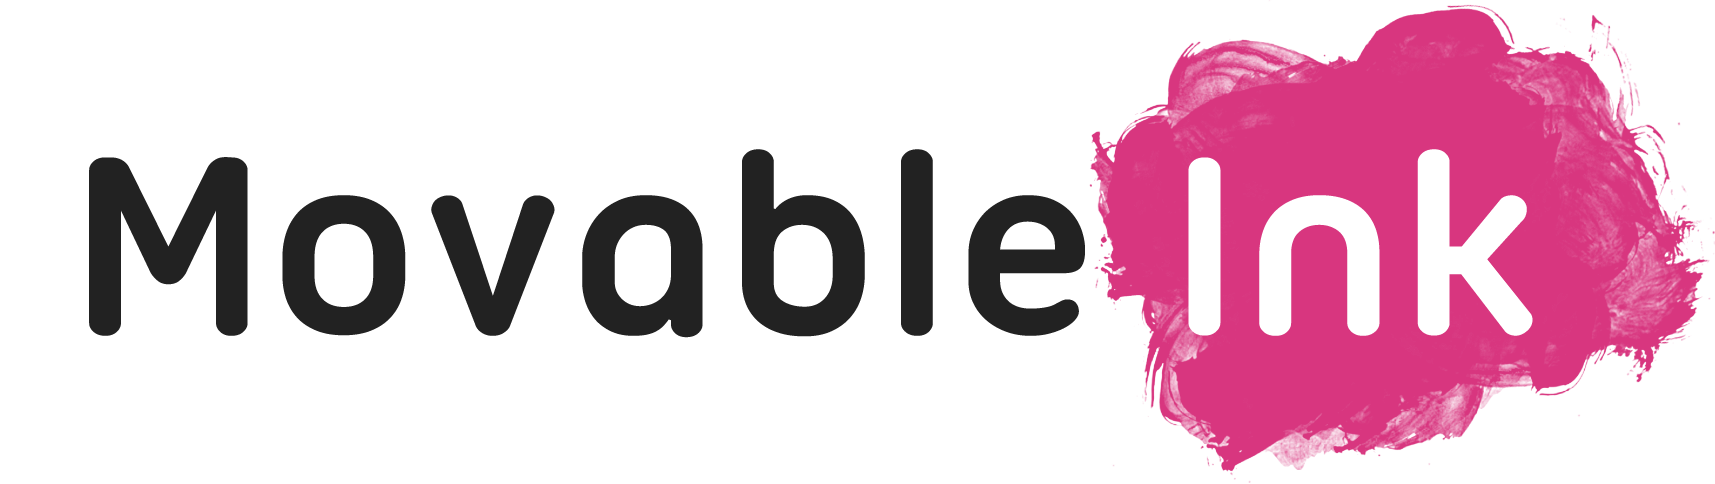 MovableInk logo transparent